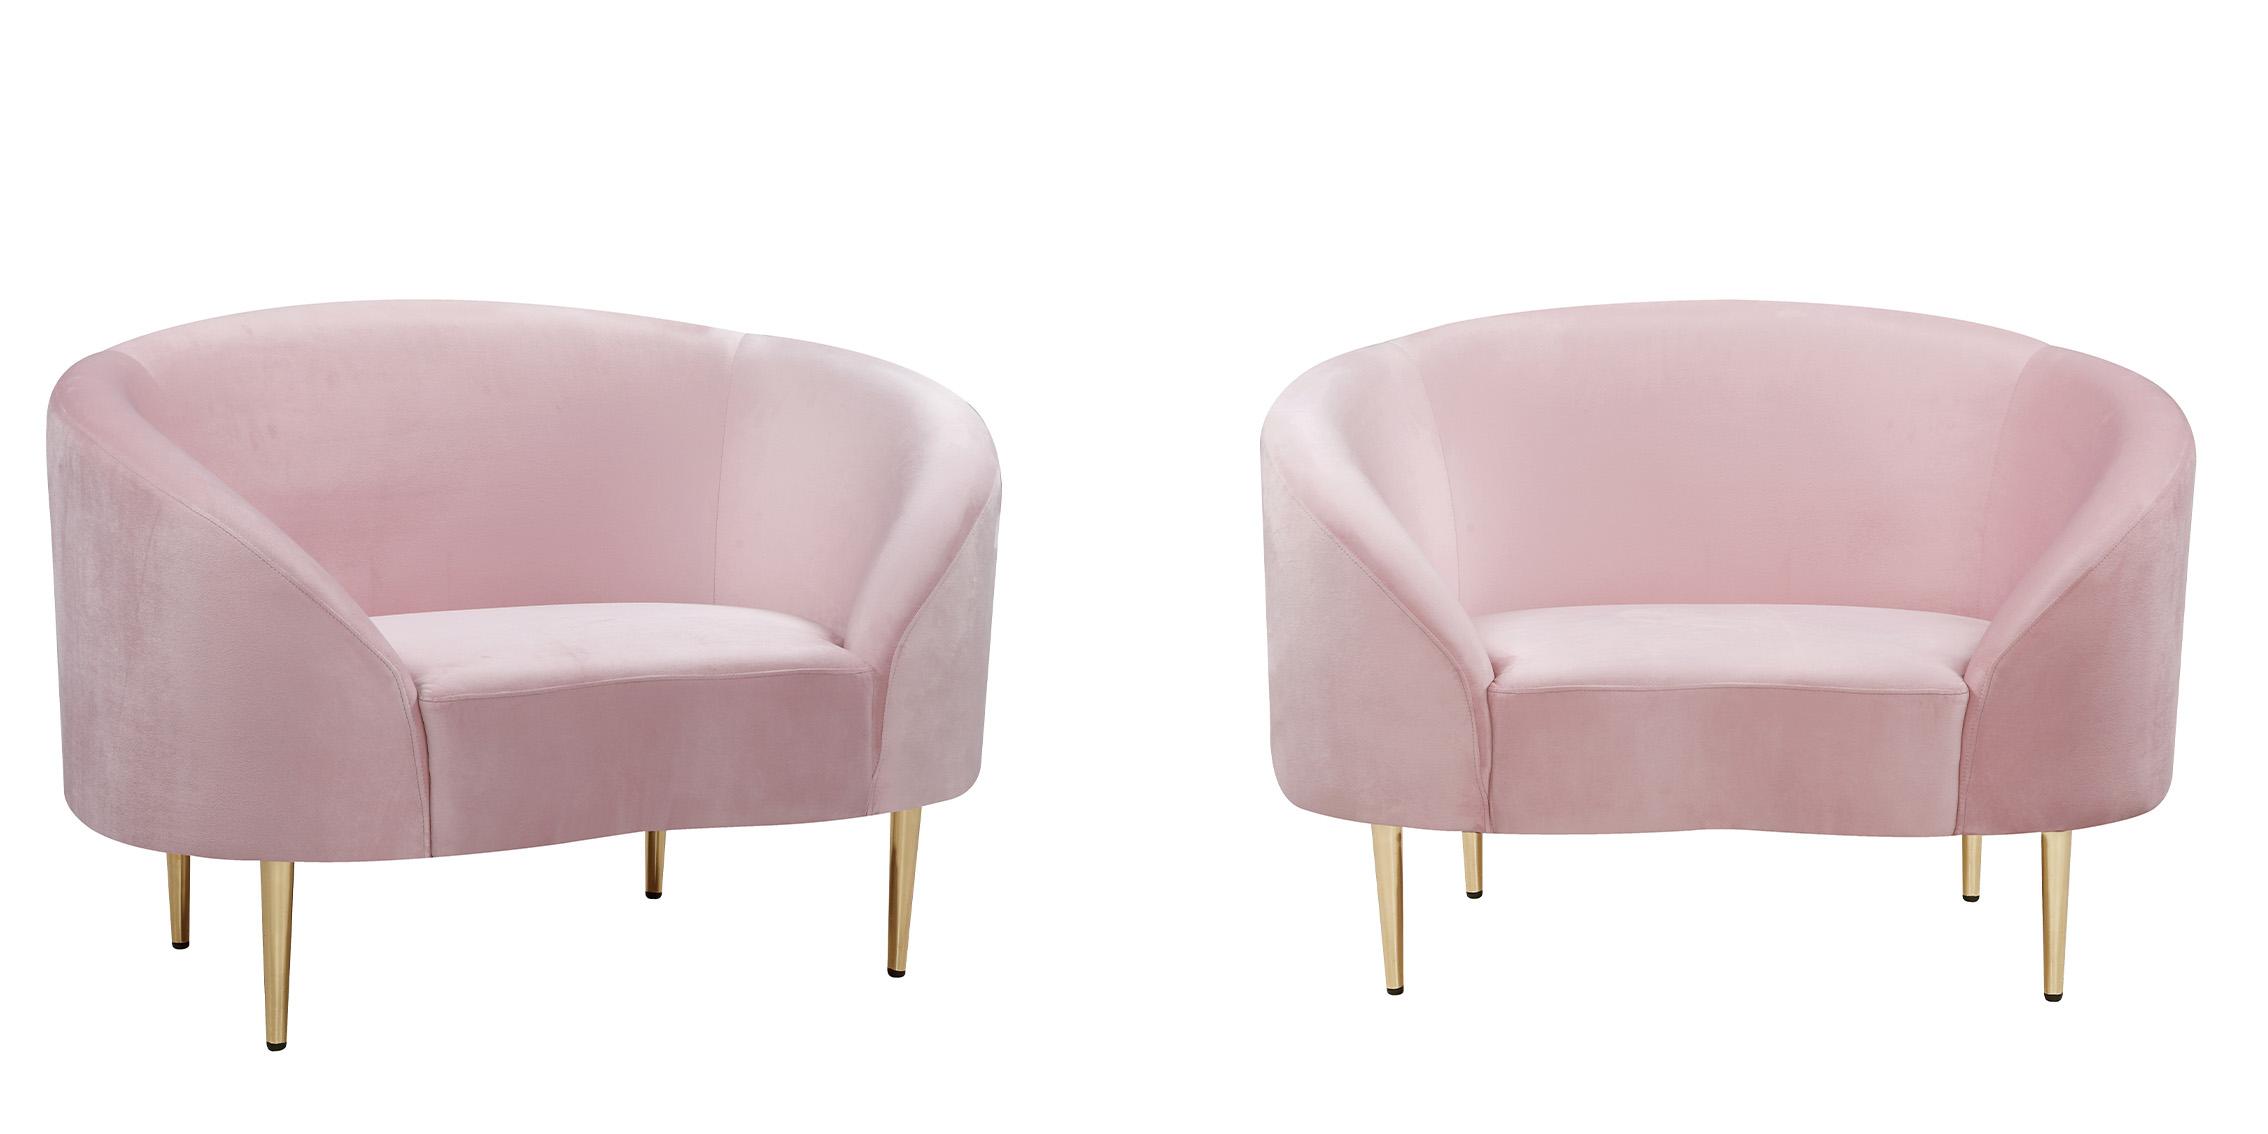 Contemporary, Modern Arm Chair Set RITZ 659Pink-C-Set-2 659Pink-C-Set-2 in Pink Velvet